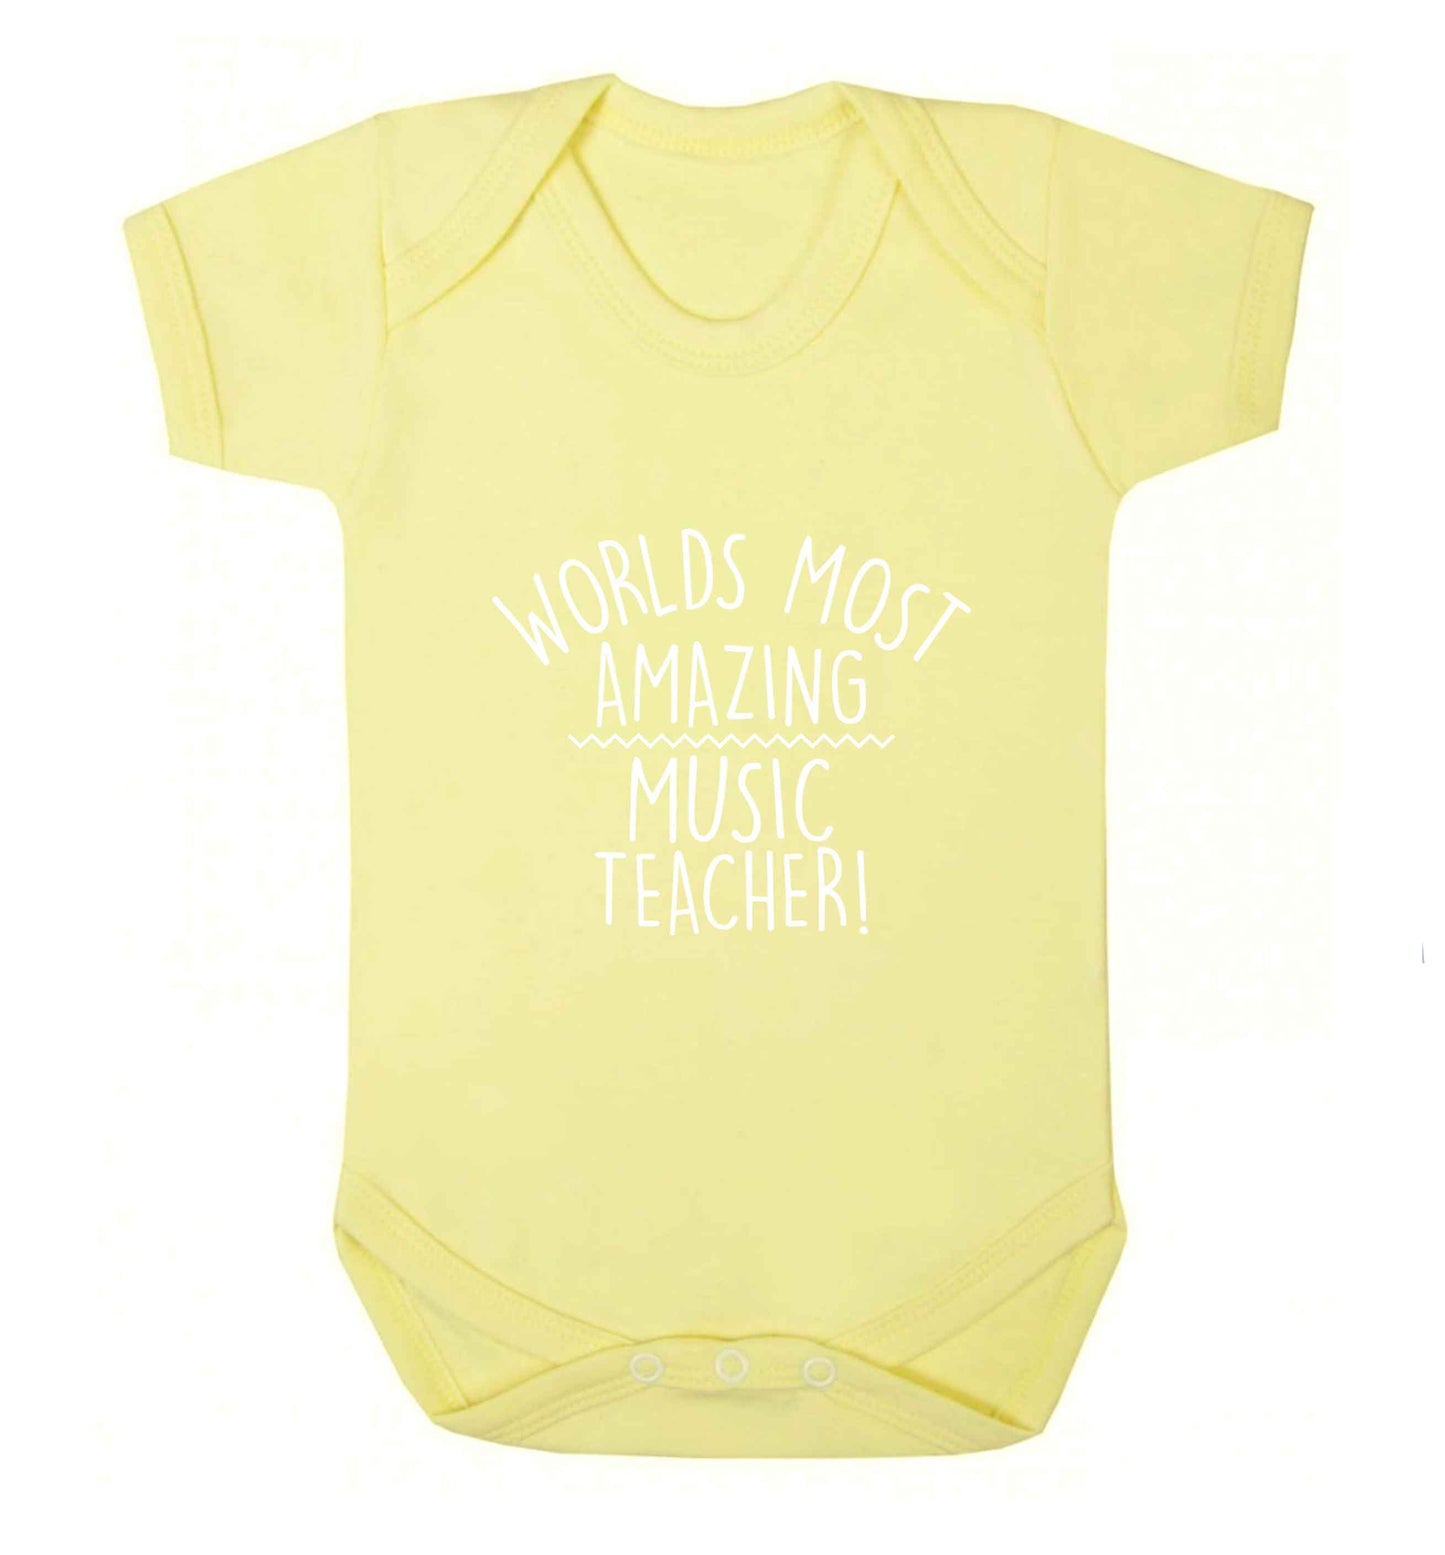 Worlds most amazing music teacher baby vest pale yellow 18-24 months